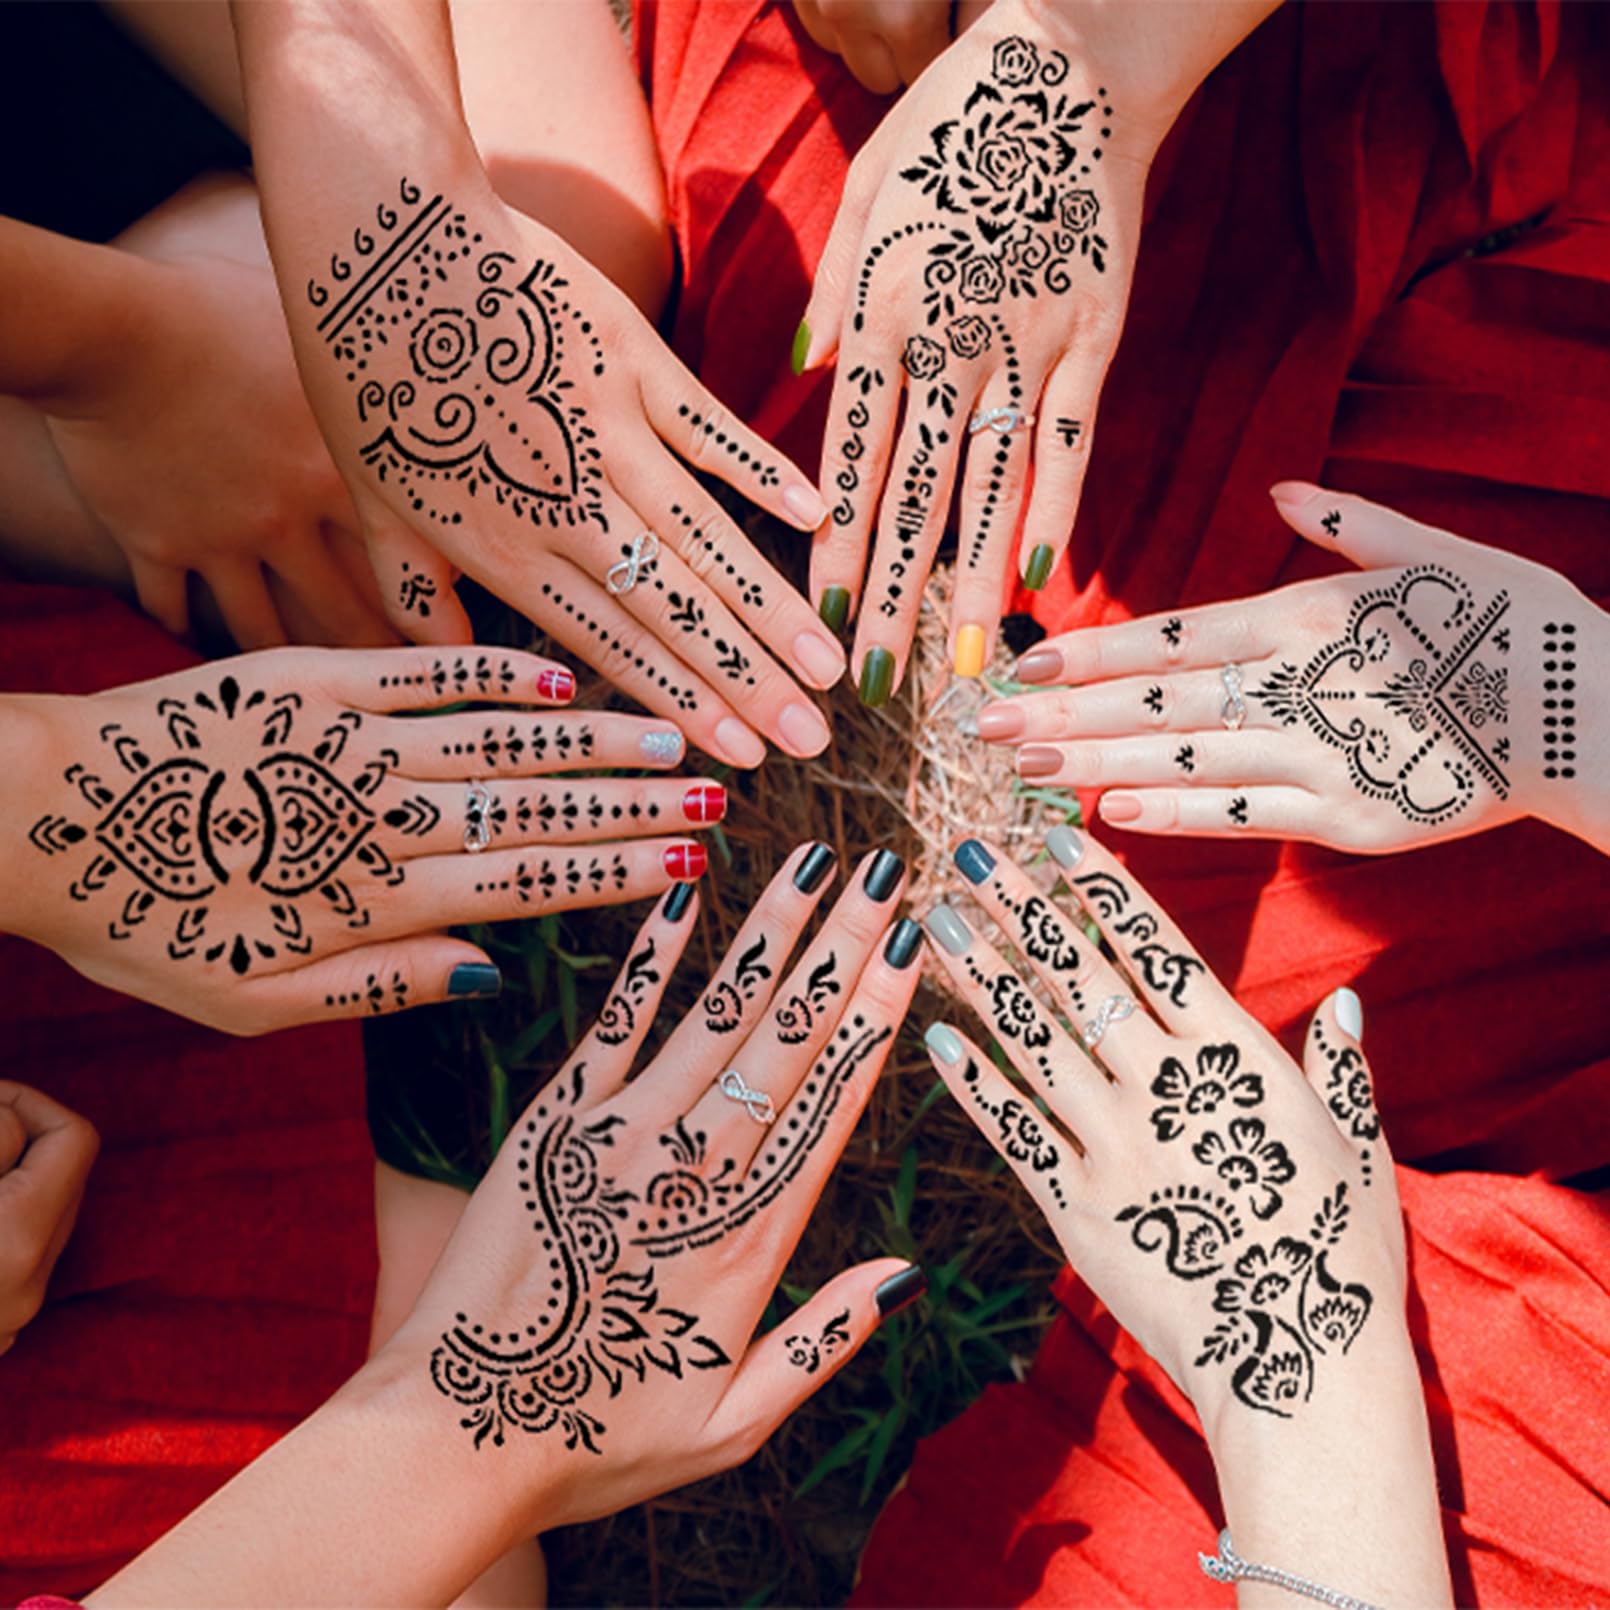 24 Sheets Henna Tattoo Stencils Kit for Hand, Indian Arabian Temporary Tattoo Template Mehndi Stencil Stickers